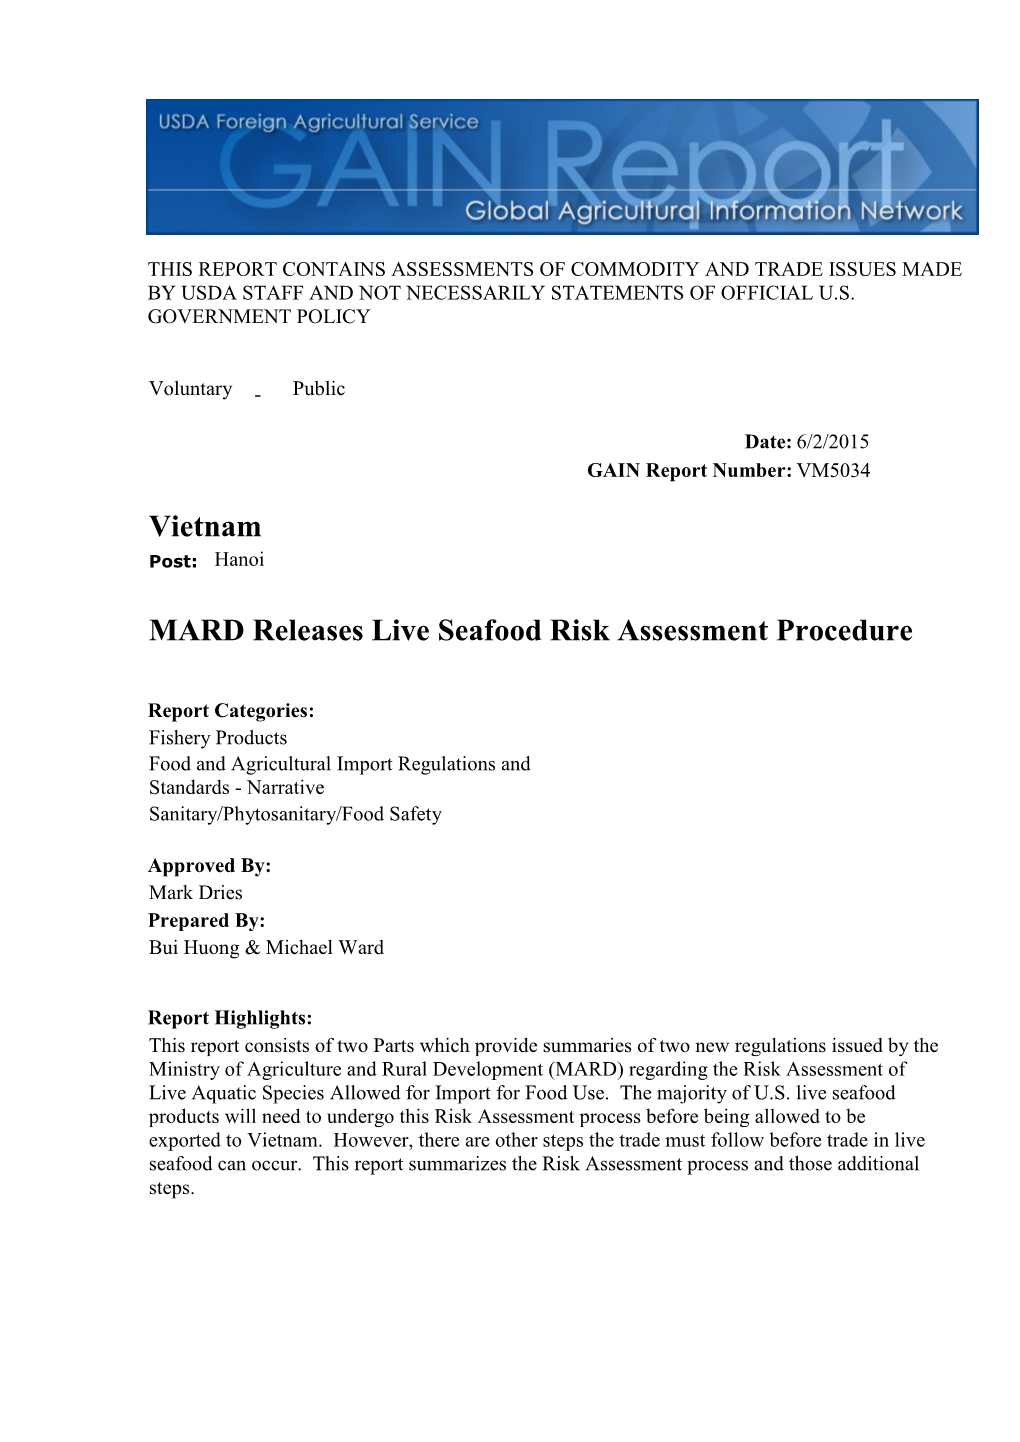 MARD Releases Live Seafood Risk Assessment Procedure Vietnam